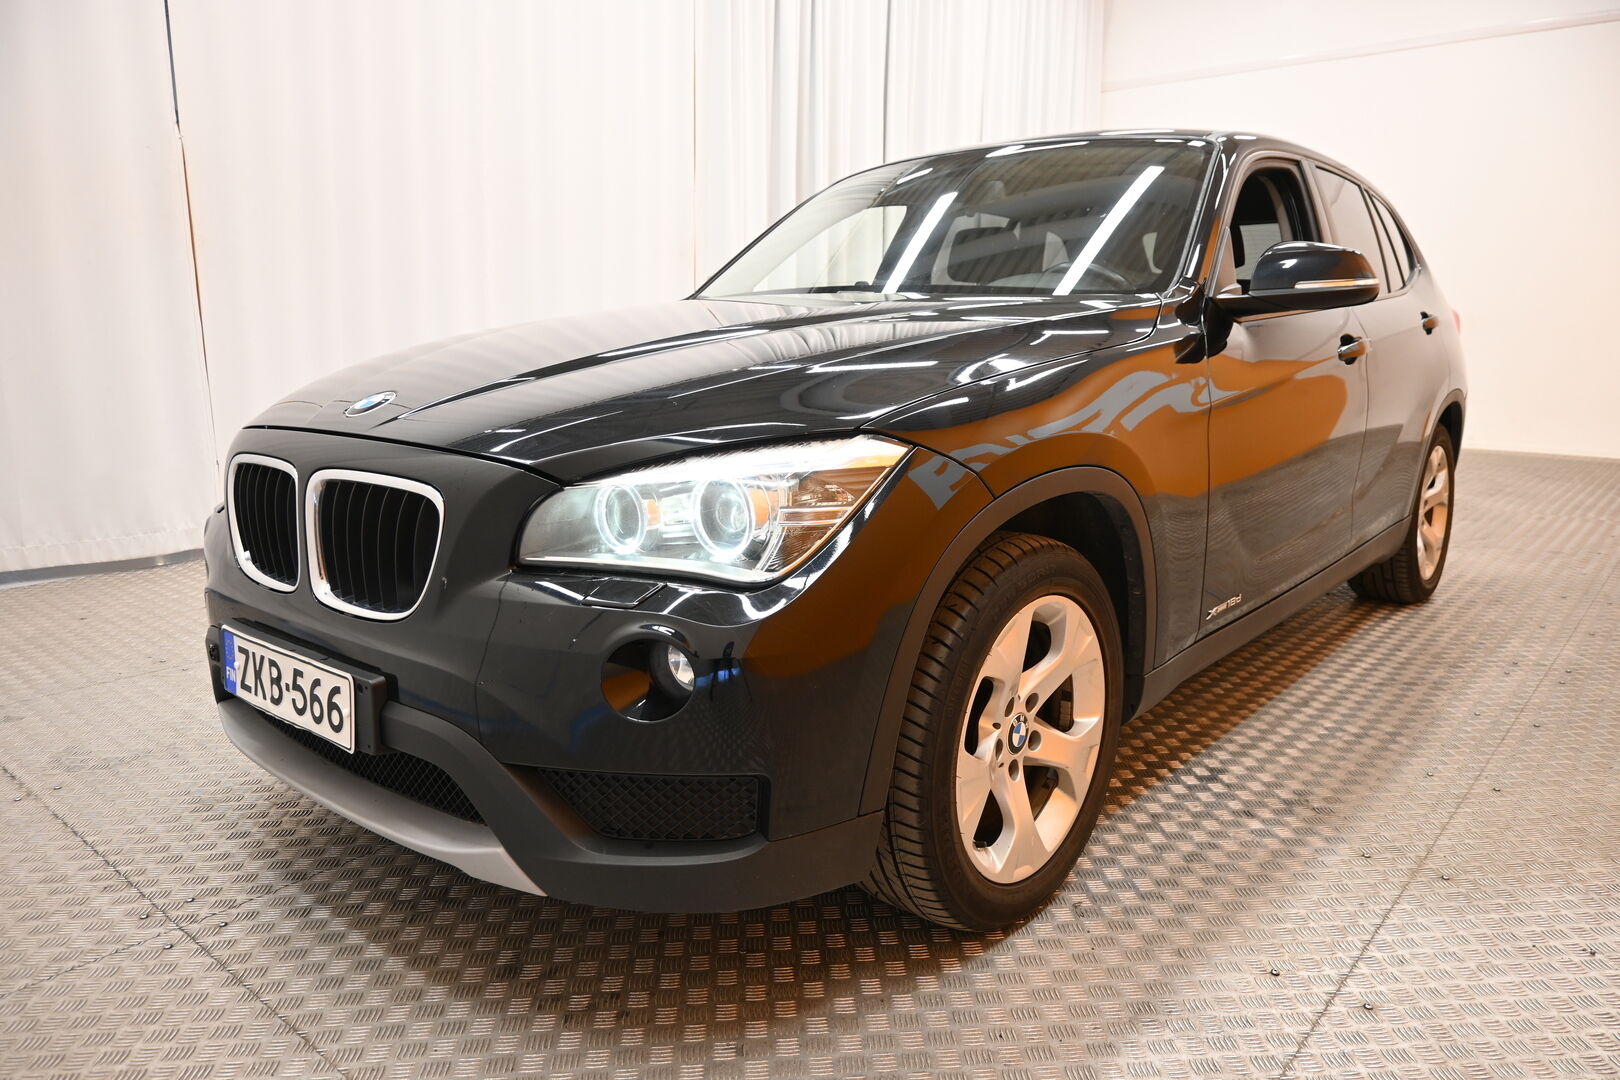 Musta Maastoauto, BMW X1 – ZKB-566